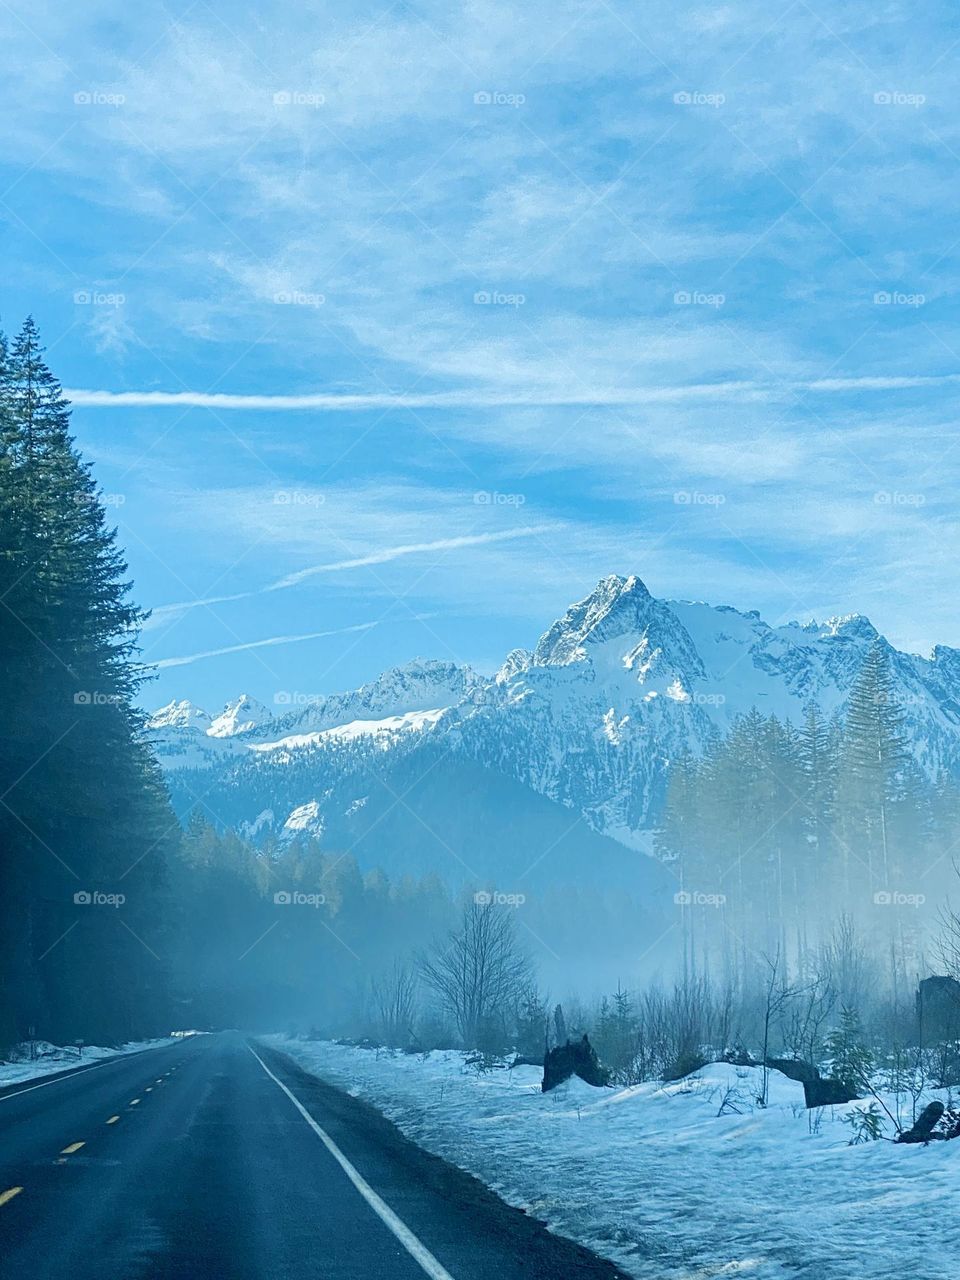 Mountain fog